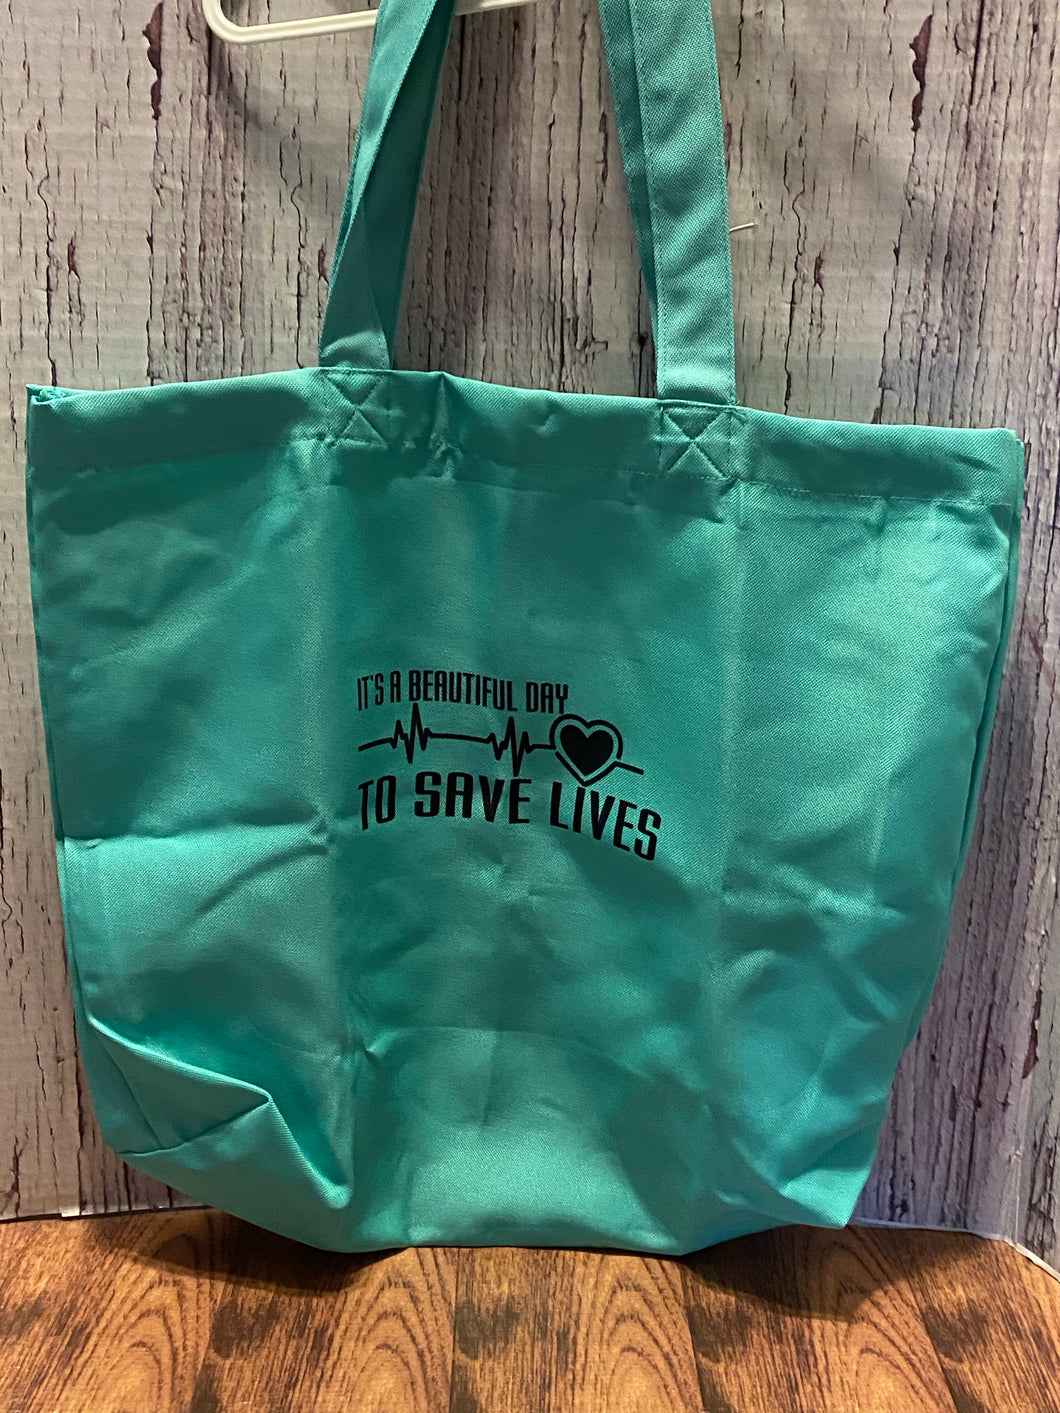 Save lives tote bag